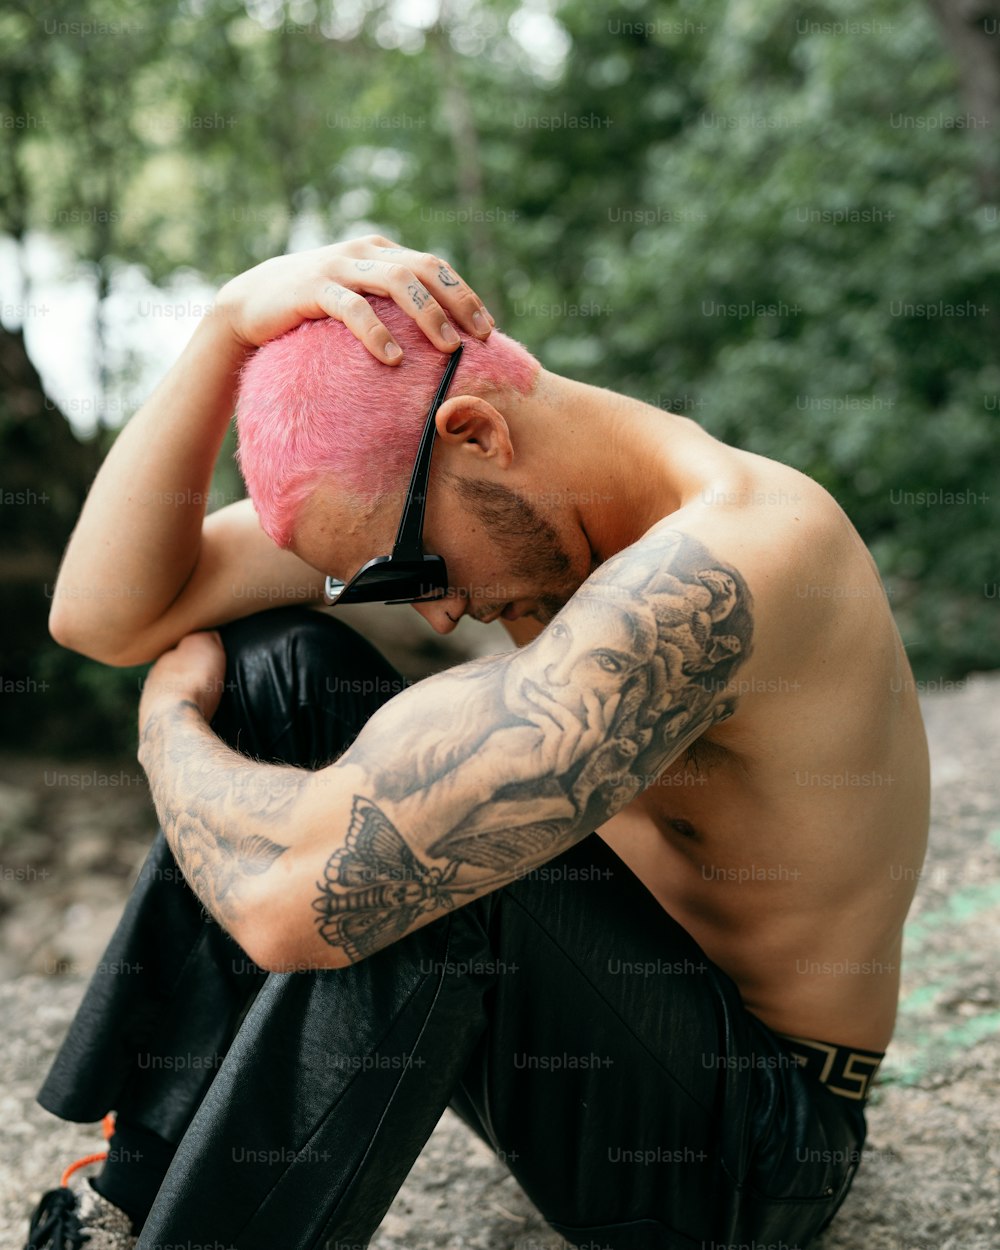 Un uomo con un mohawk rosa seduto su una roccia